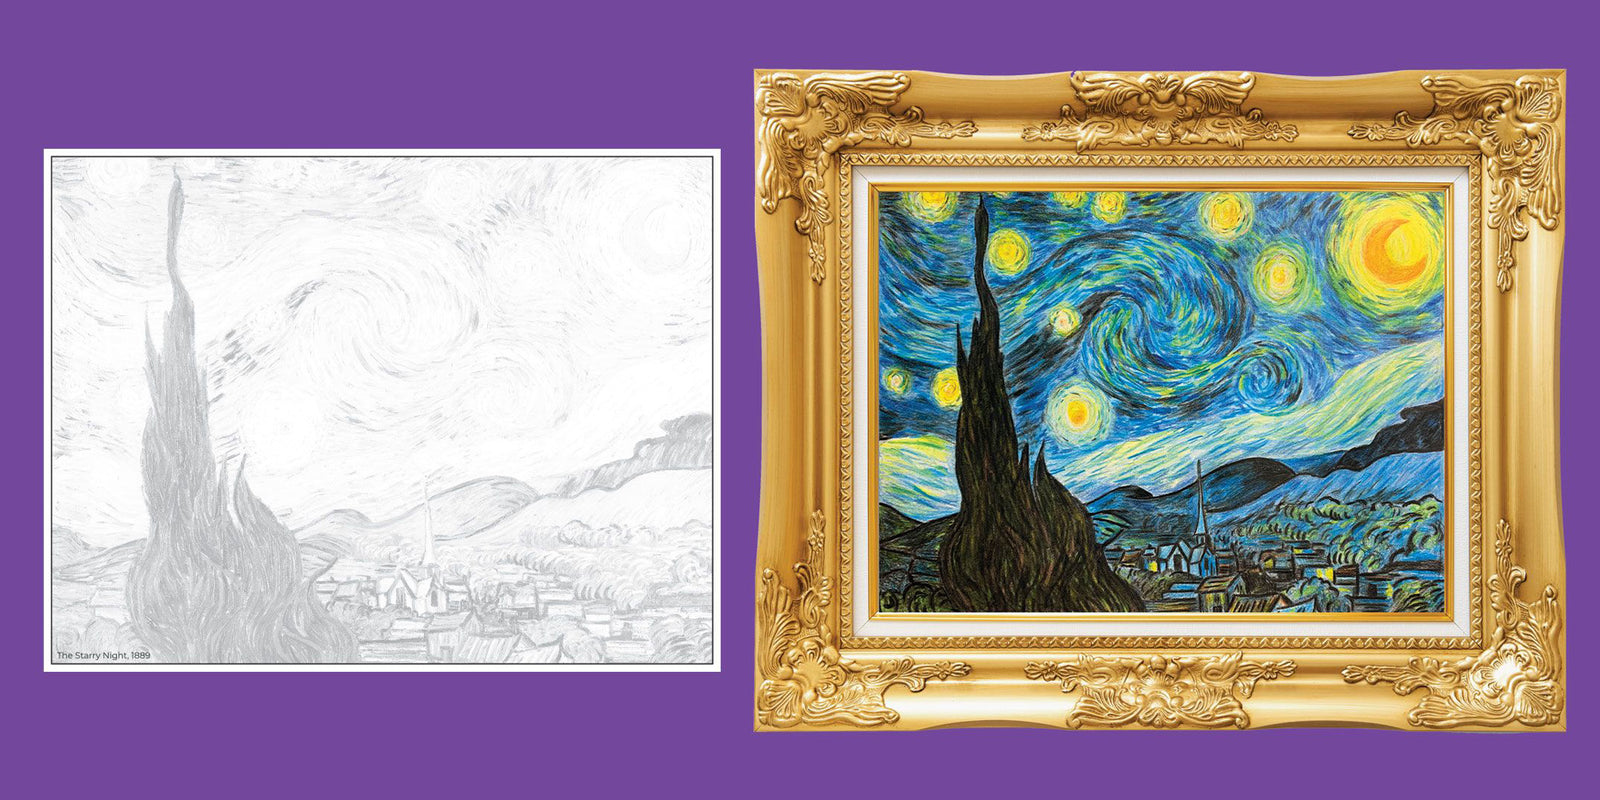 Van Gogh Inspired Colored Pencil Art Gift Set - 'Van Gogh Colors' – Pop  Colors